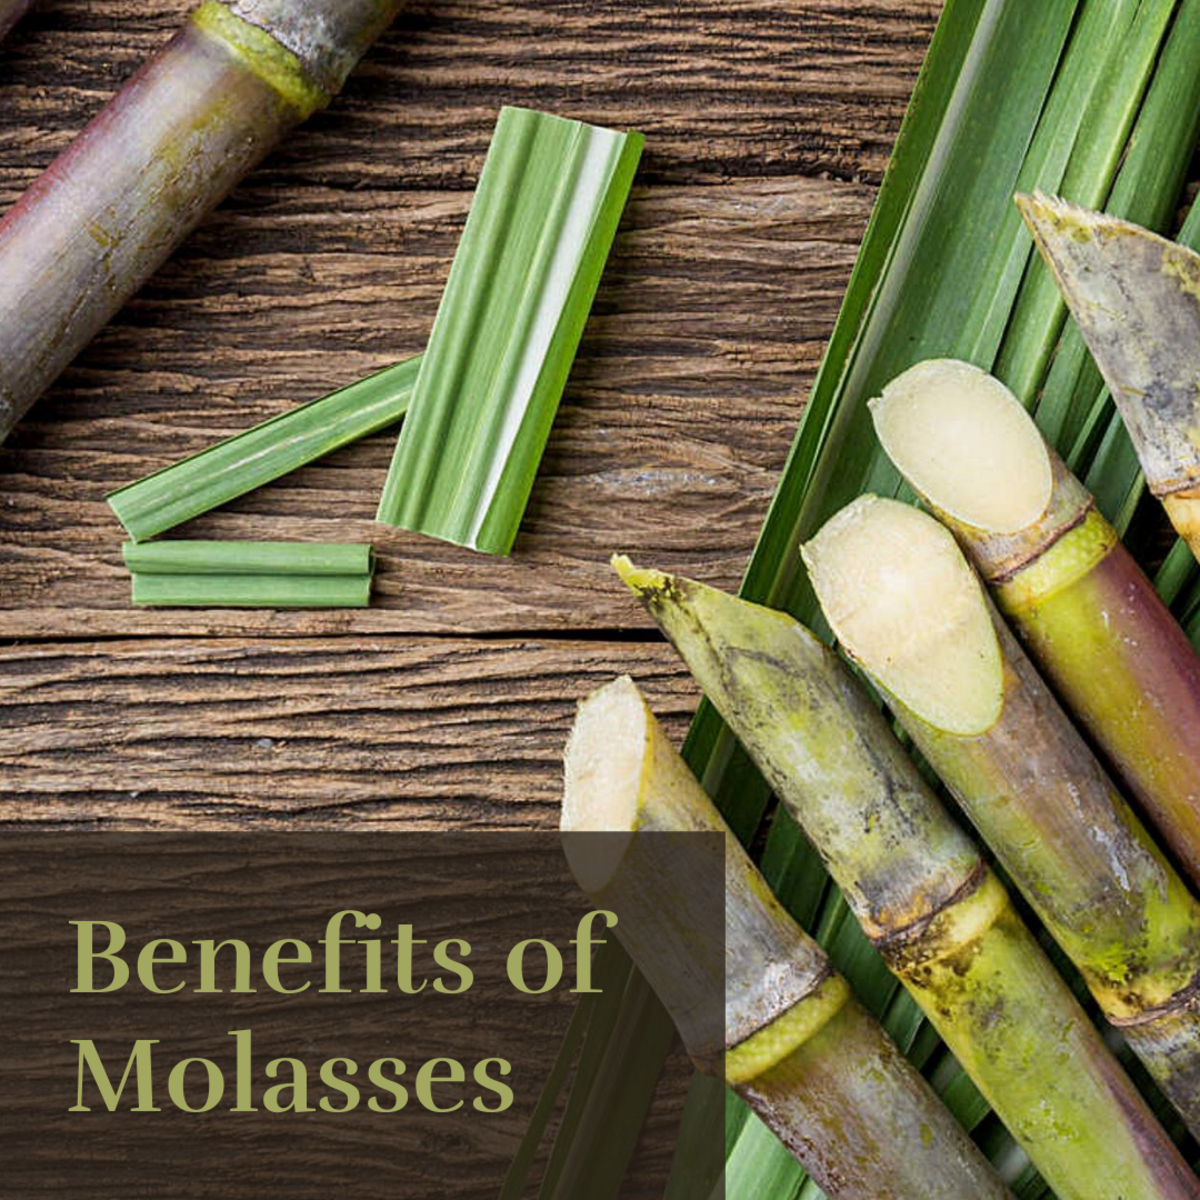 The Health Benefits of Molasses